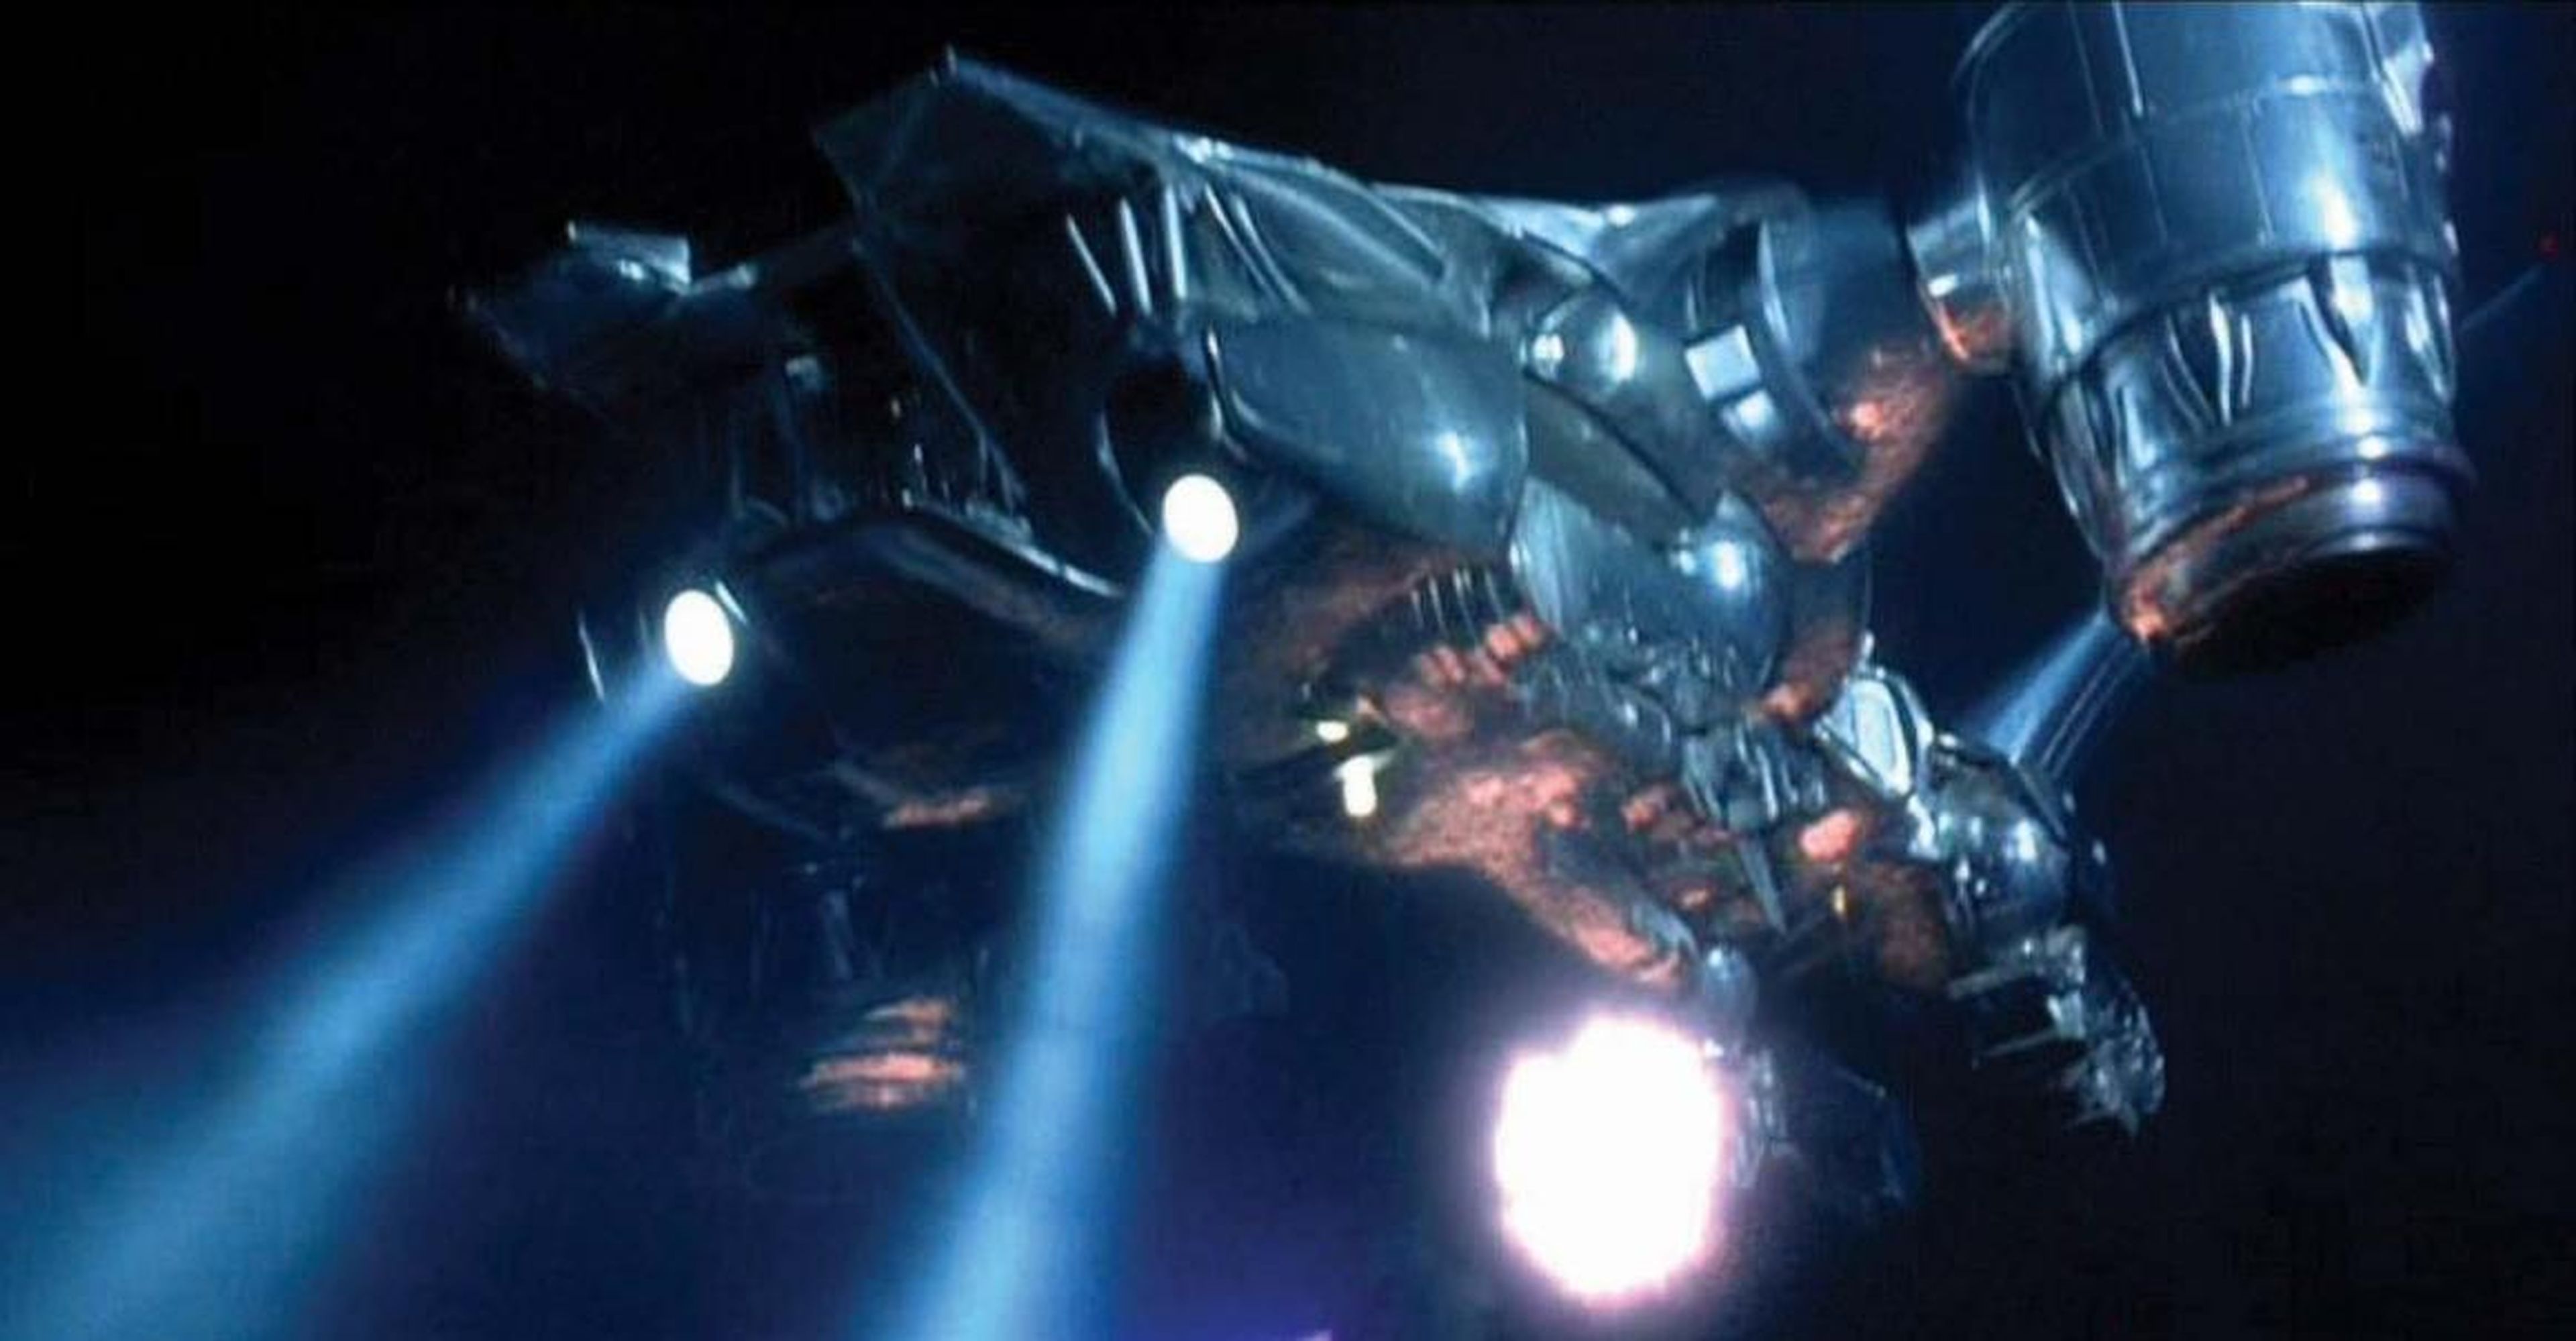 Military drones — 'The Terminator,' 1984